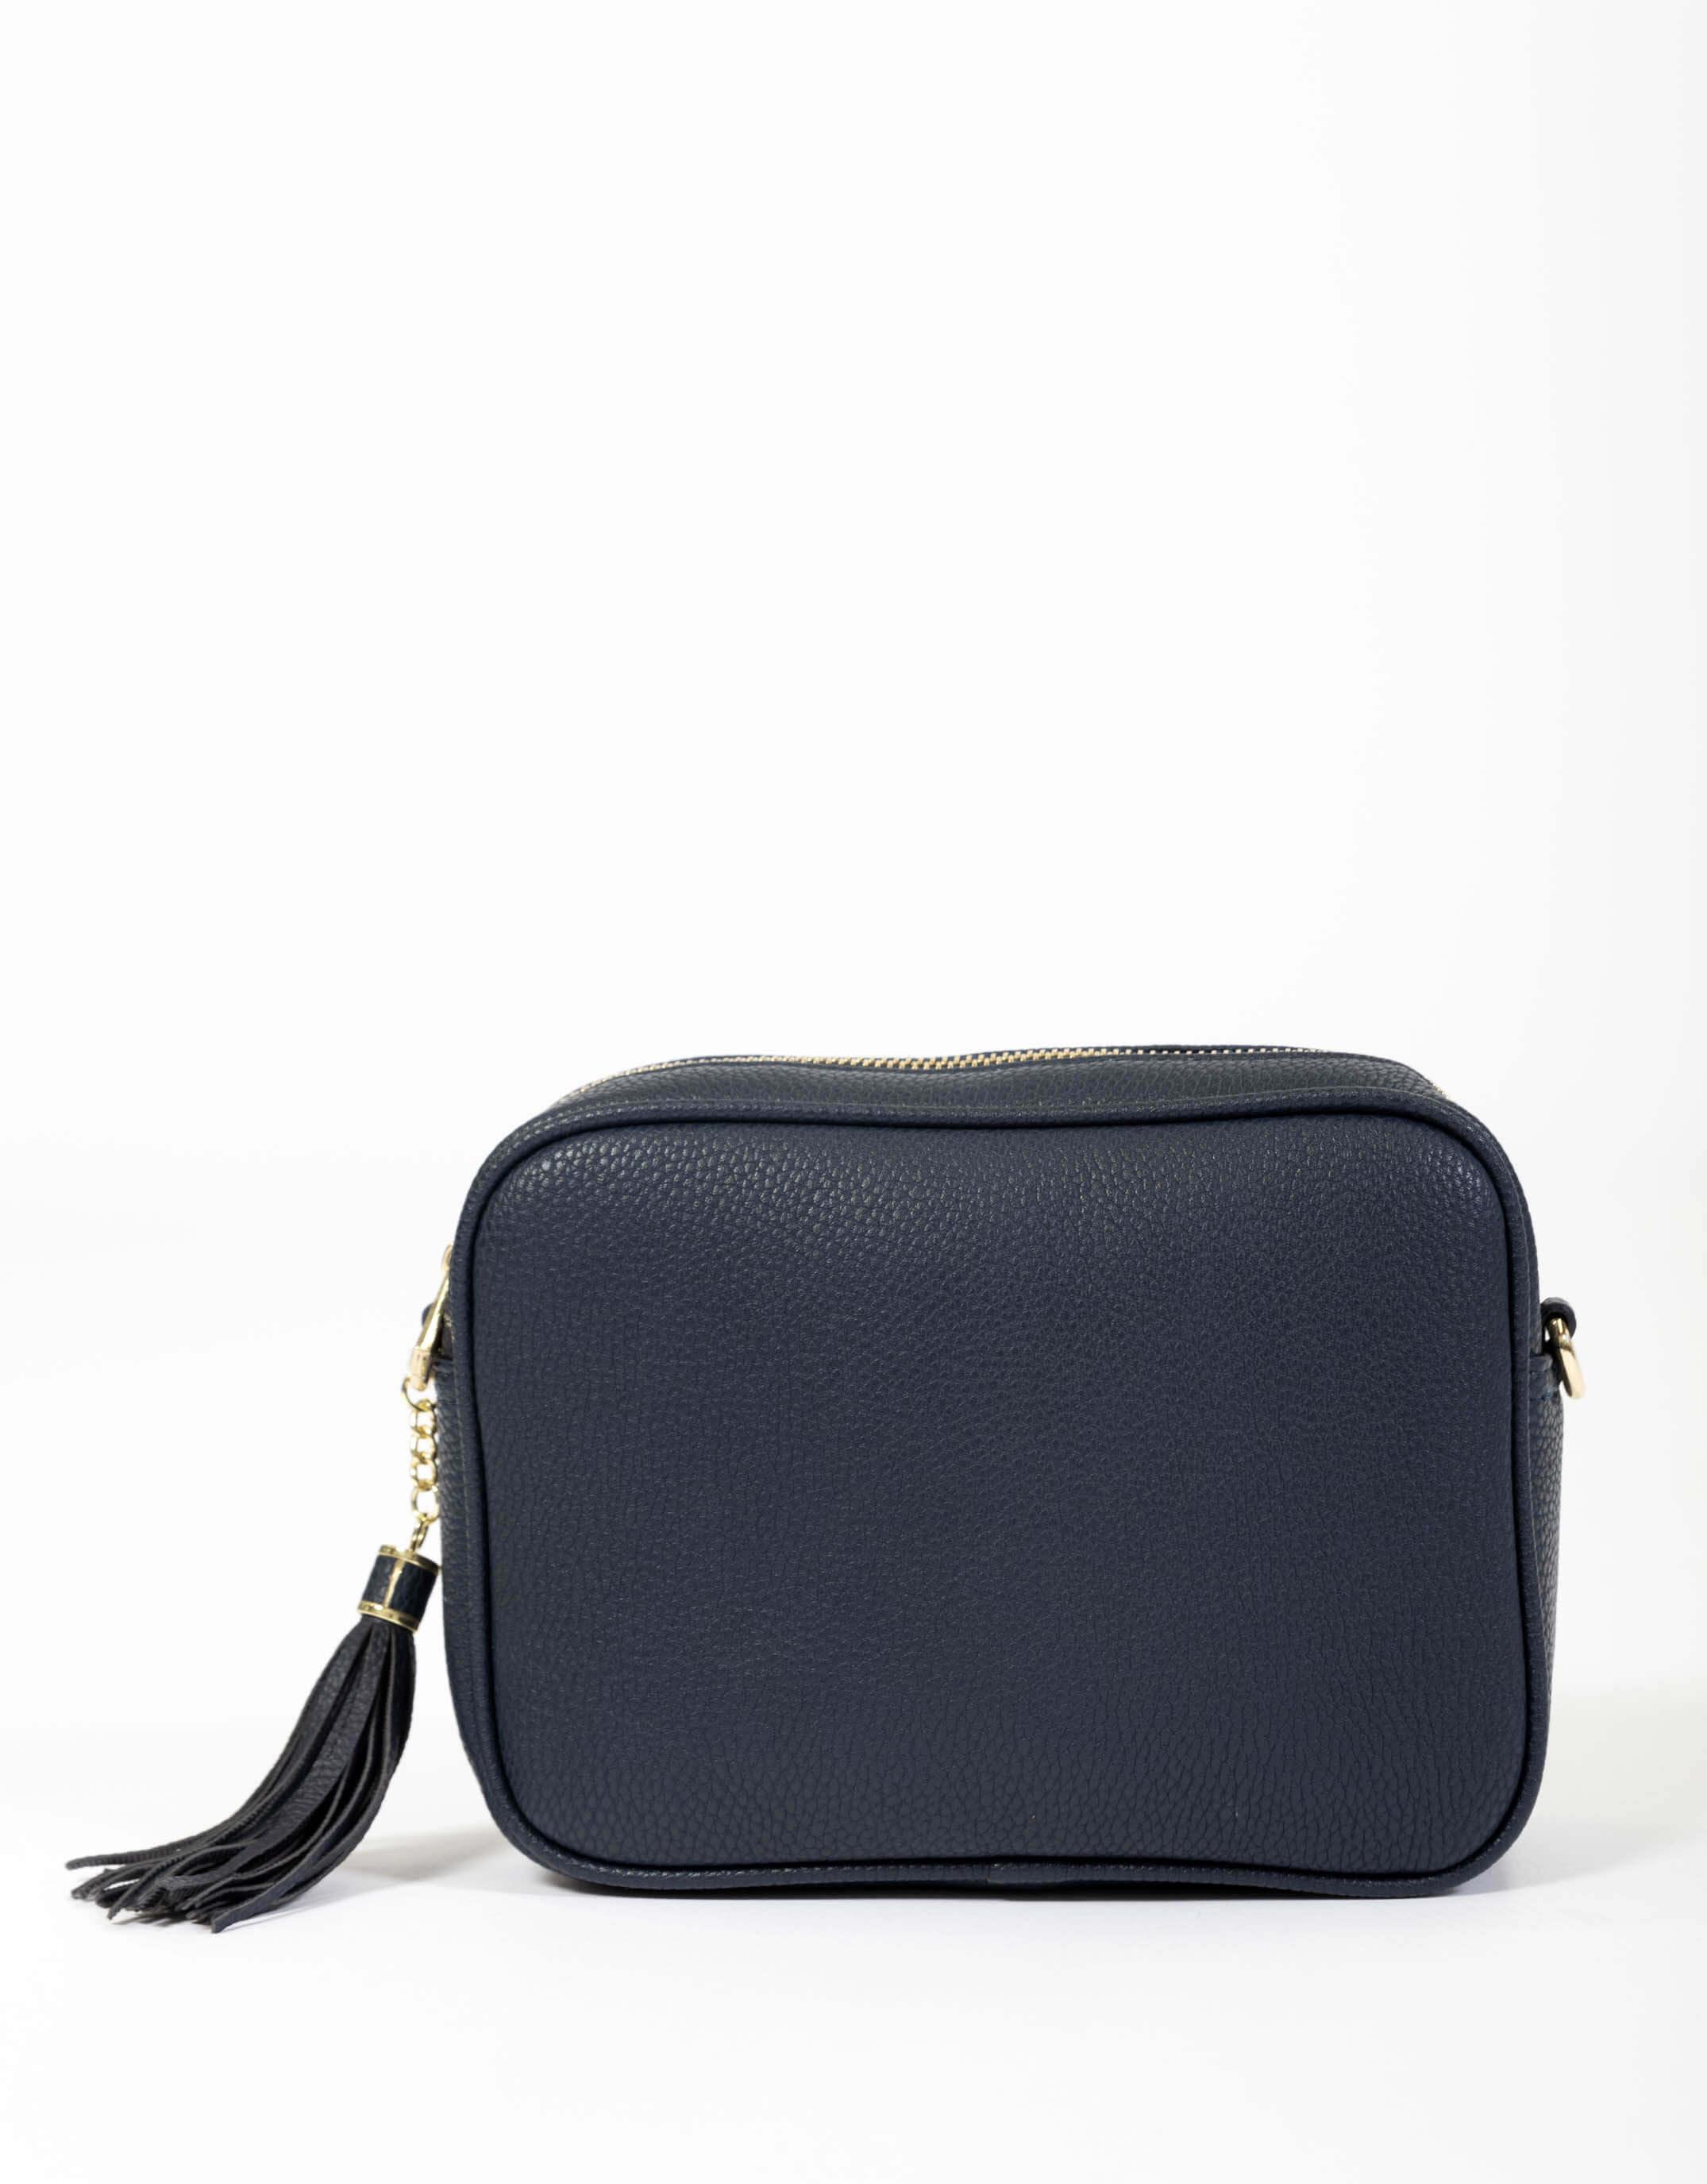 Buy Zoe Crossbody Bag - Navy/Lolly Stripe White & Co. for Sale Online ...